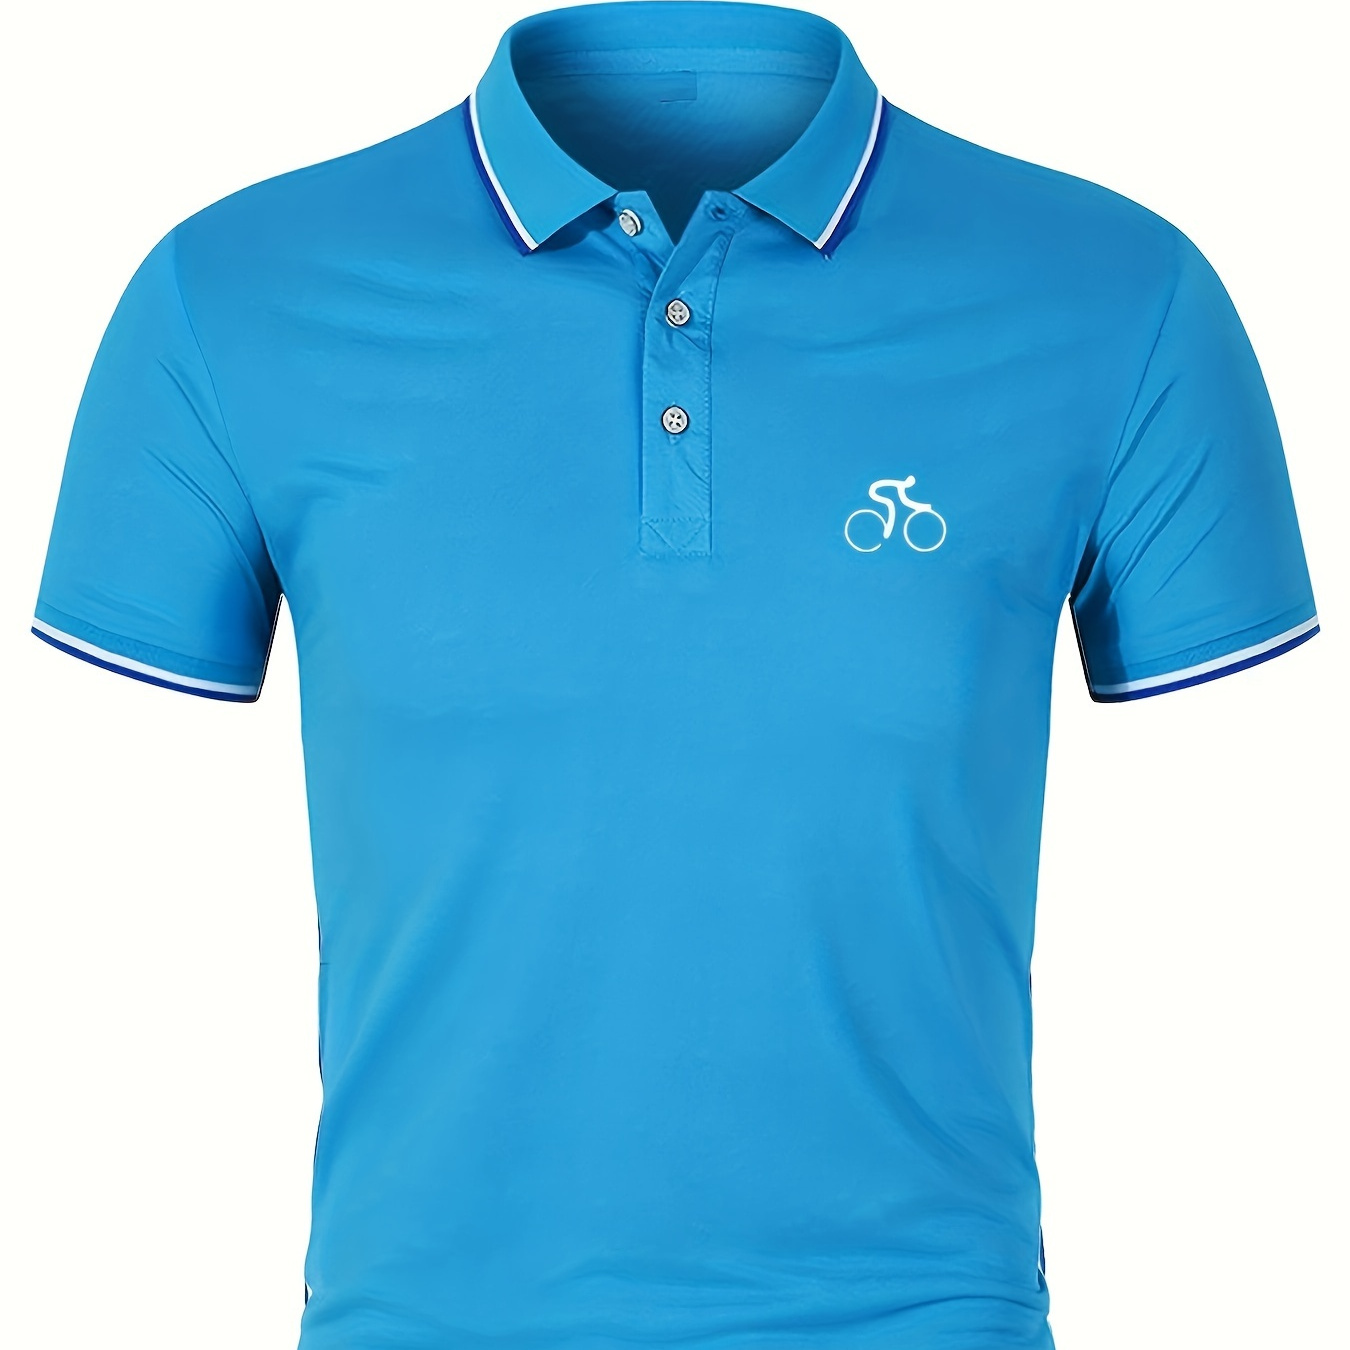 

Men's Golf Shirt, Cycling Print Short Sleeve Breathable Tennis Shirt, Business Casual, Moisture Wicking